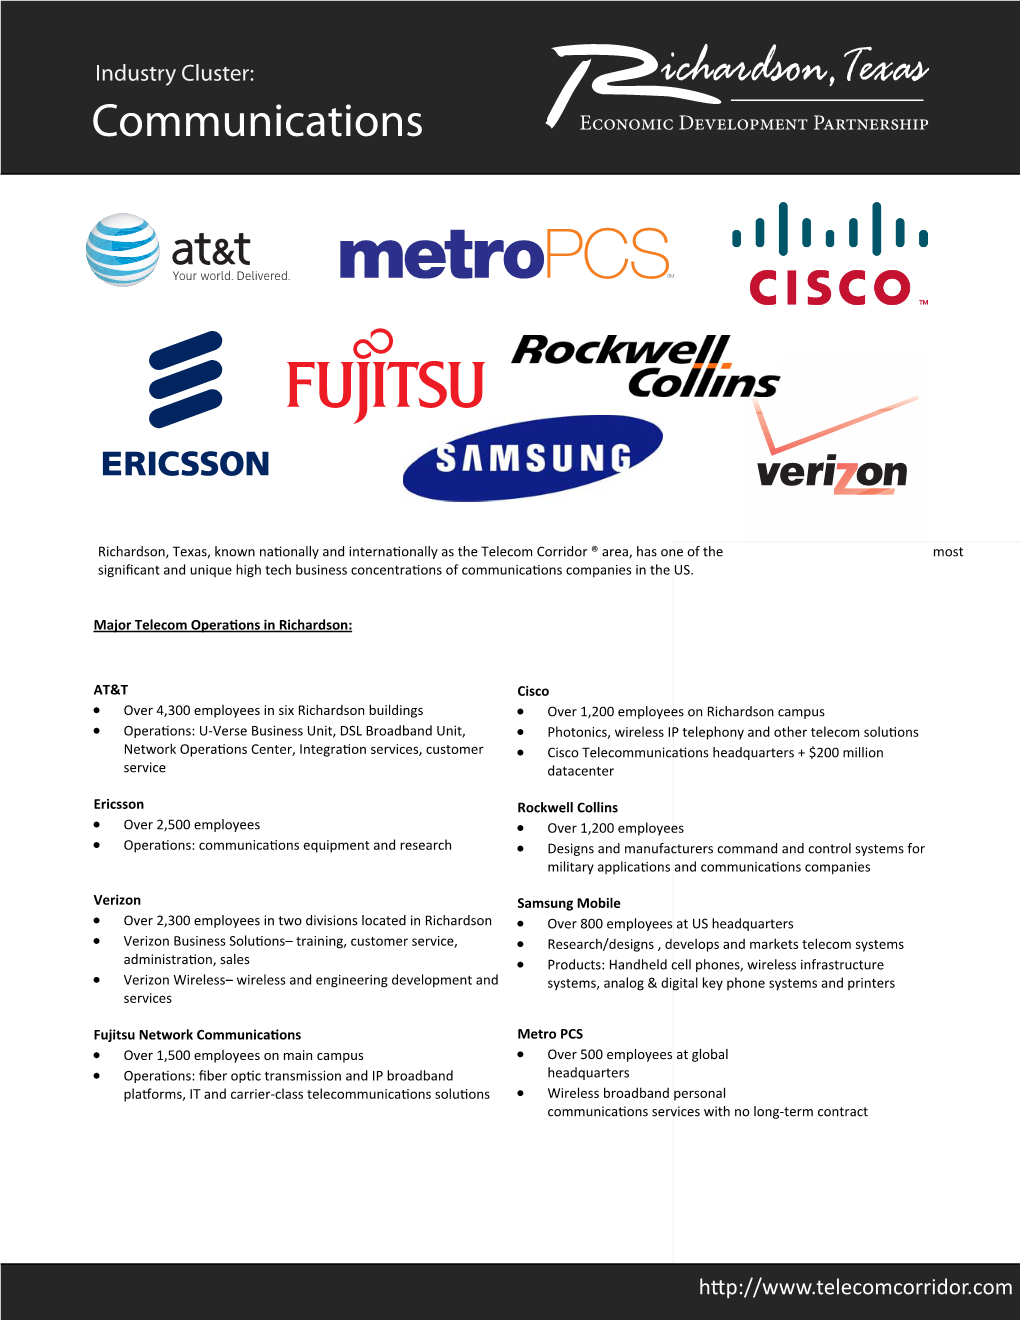 Telecom-Wireless Industry Cluster Brochure